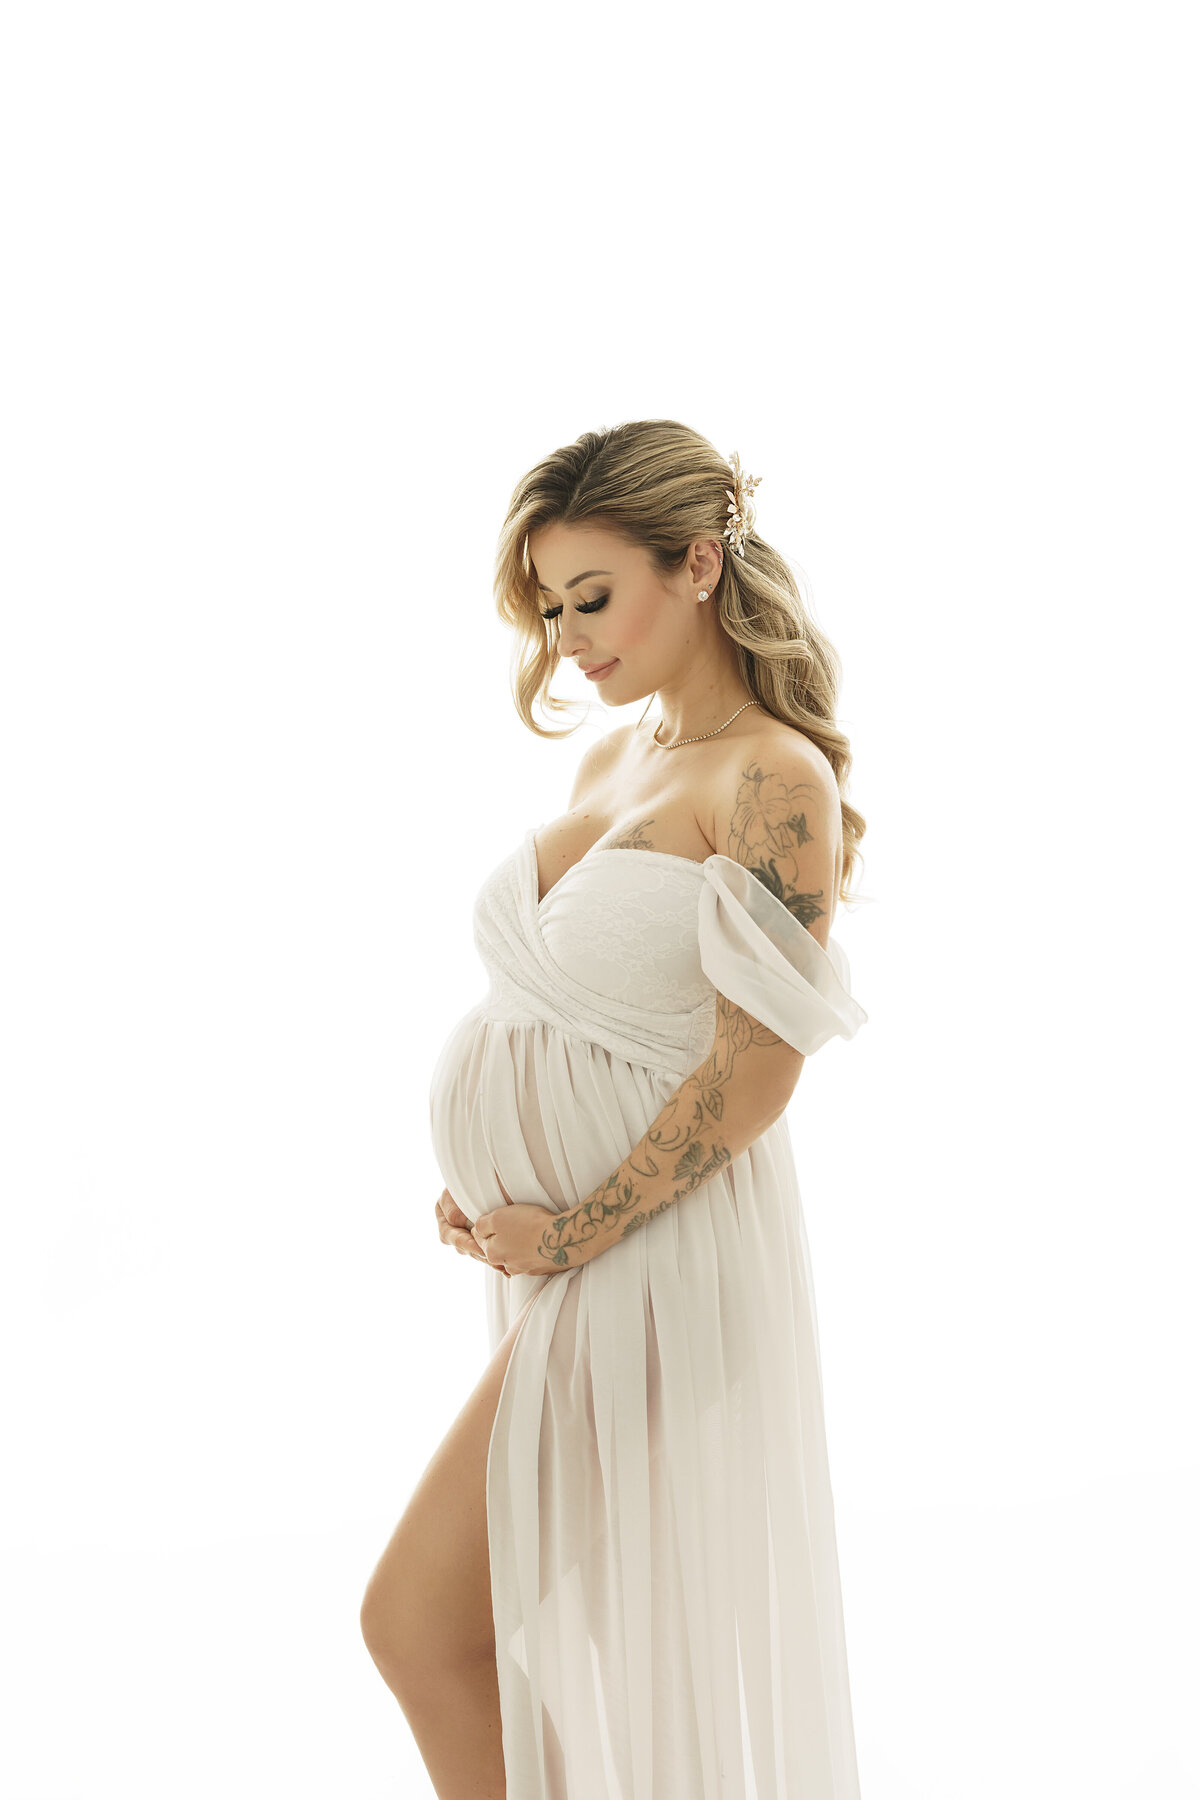 Katie H. - maternity-5